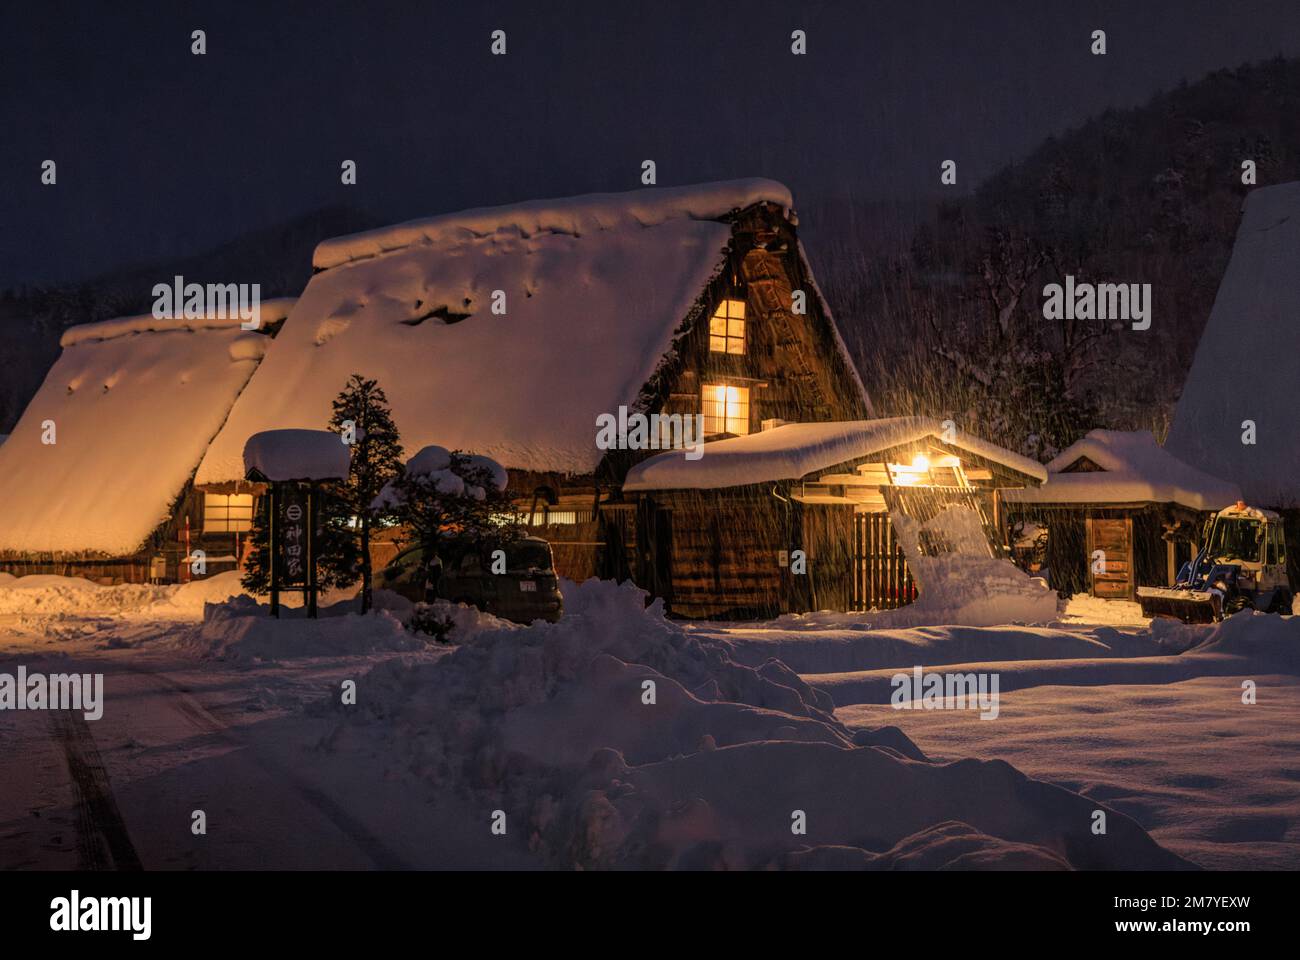 Snow falls on traditional Japanese gassho-zukuri house at night Stock Photo